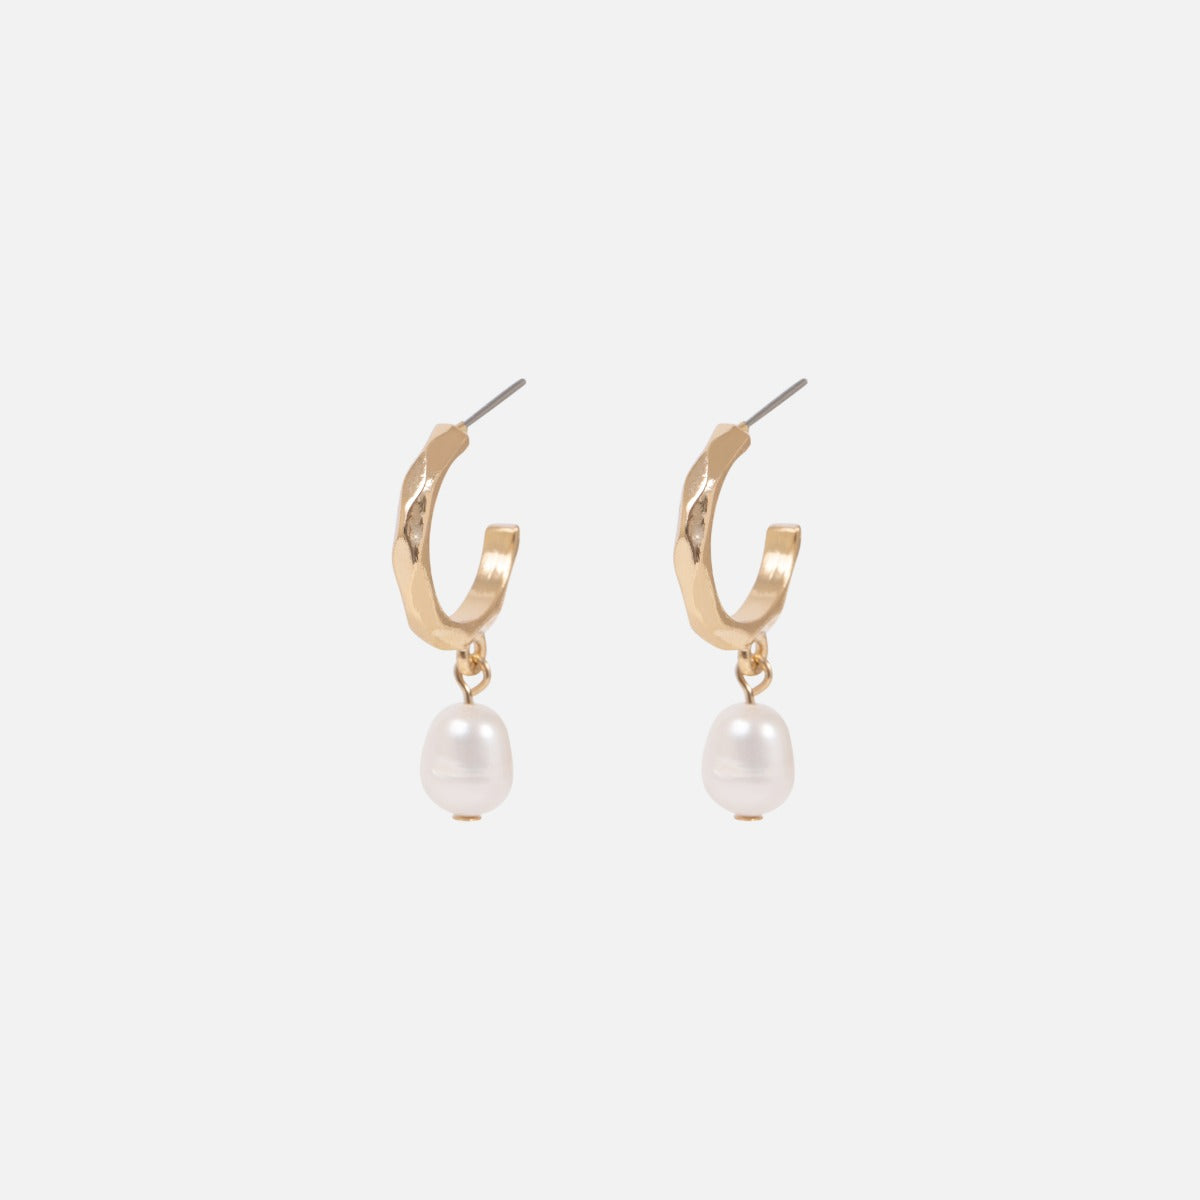 Small golden open hoop earrings with pearl